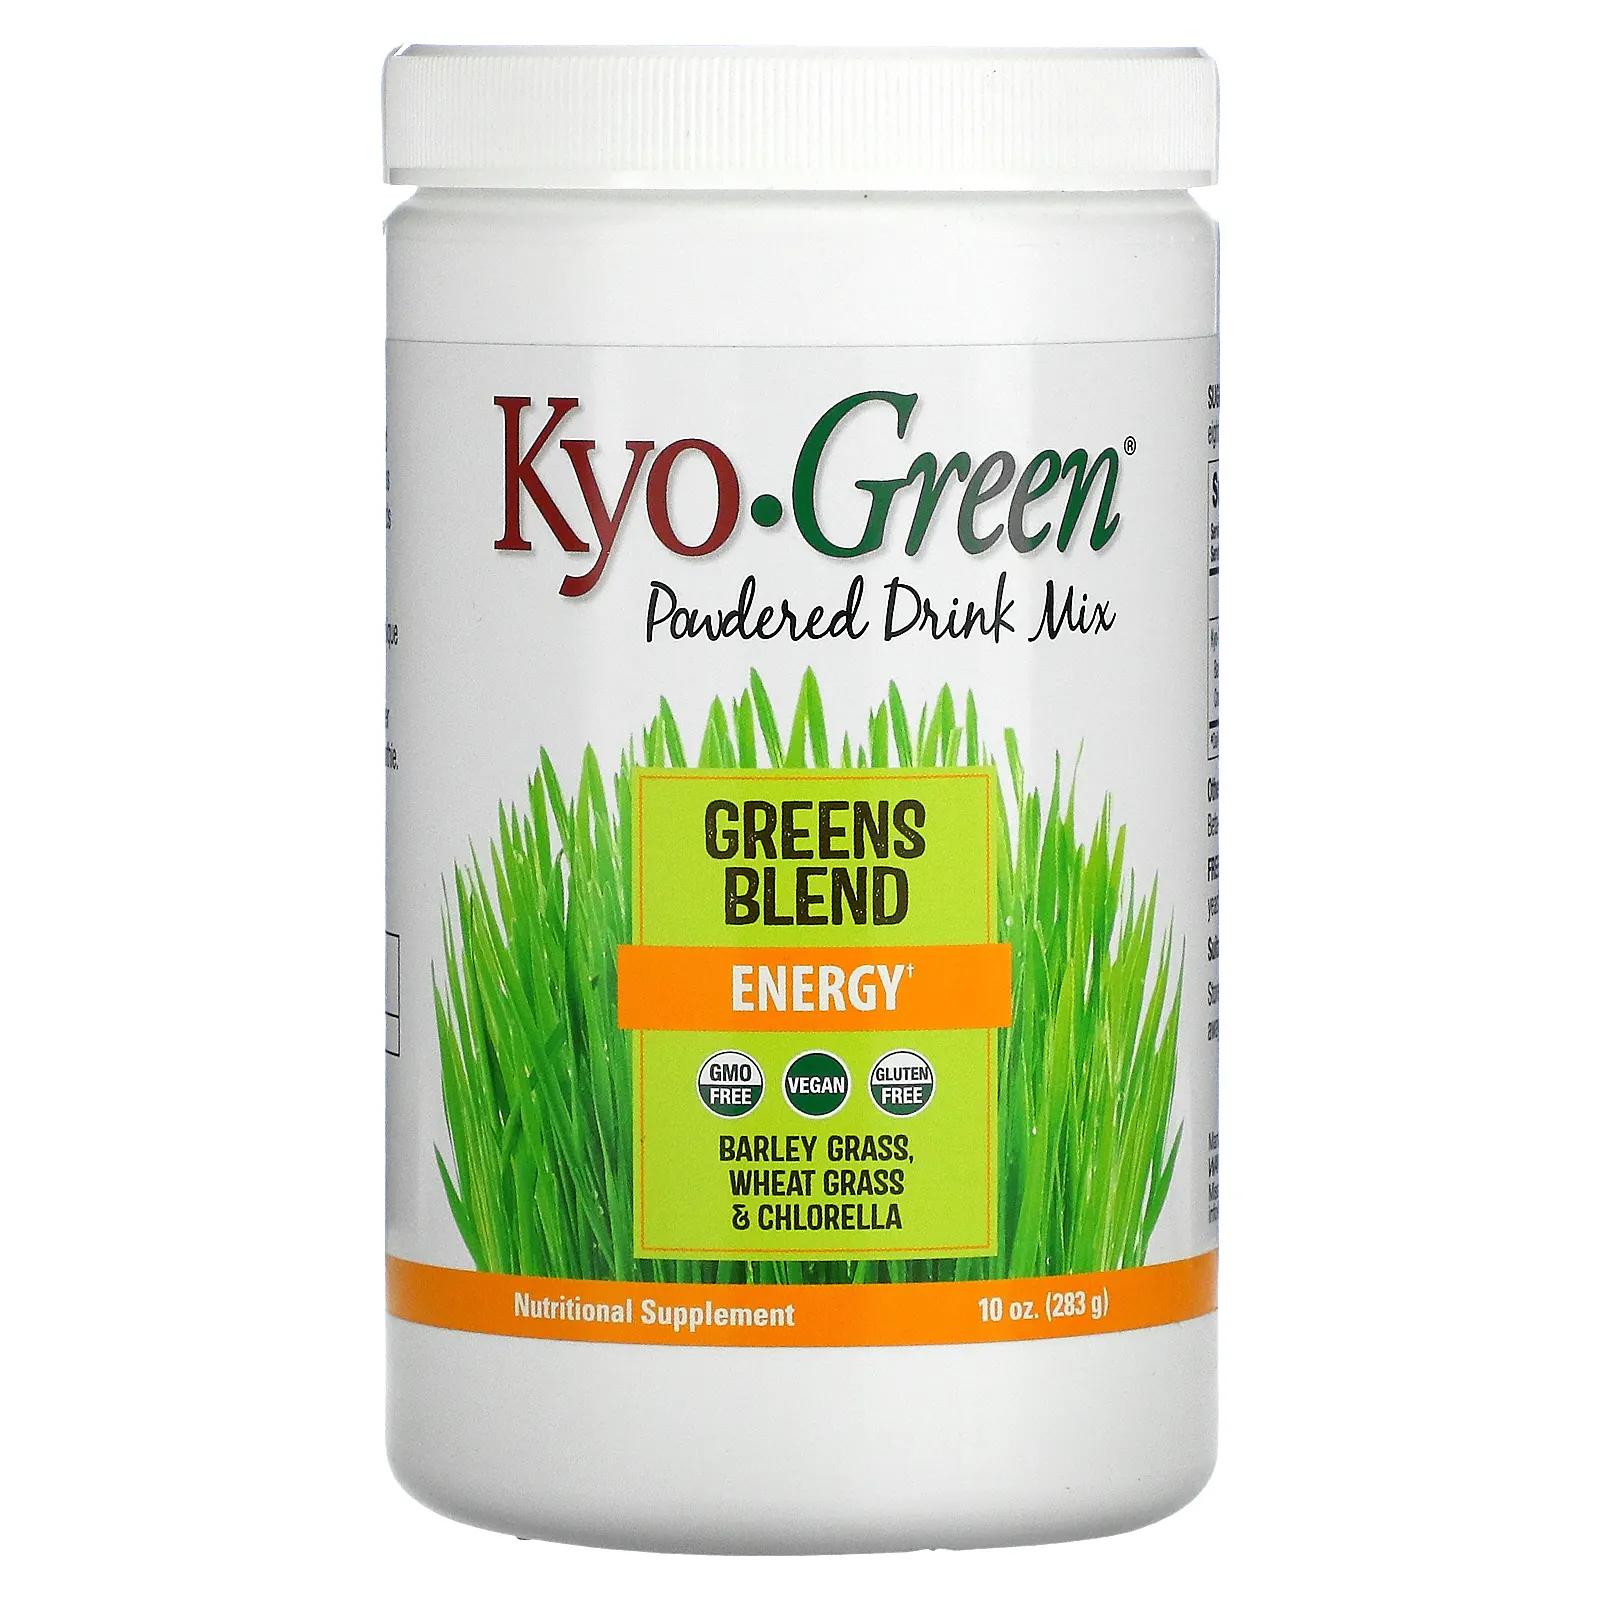 Kyolic Kyo-Green сухая смесь для напитка 10 унций (283 г) kyolic kyo green сухая смесь для напитка 5 3 унции 150 г